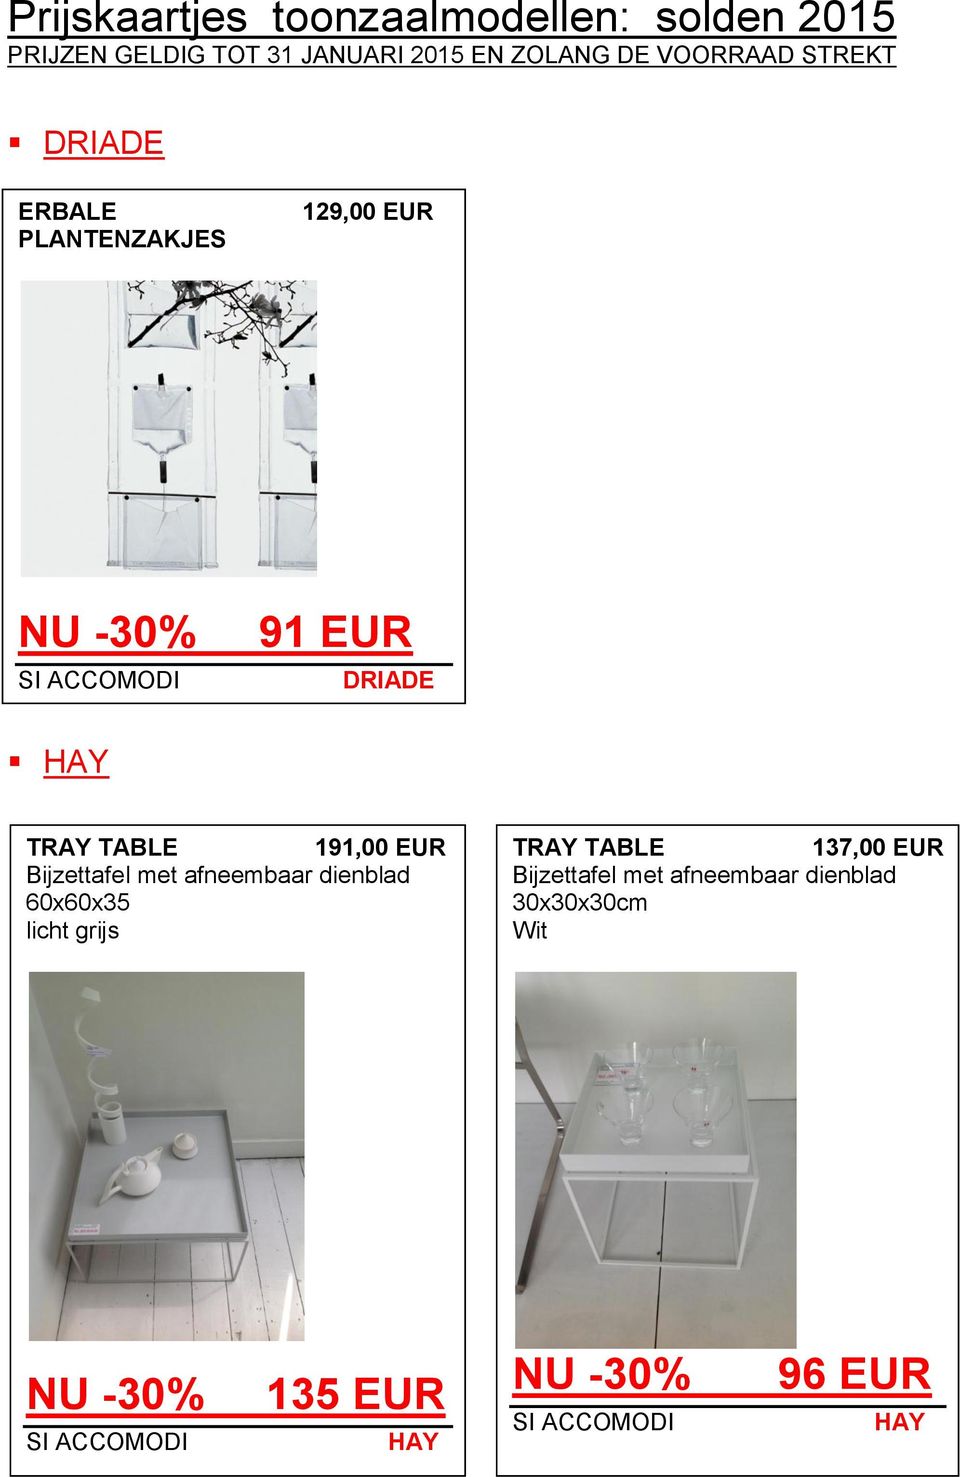 60x60x35 licht grijs TRAY TABLE 137,00 EUR Bijzettafel met